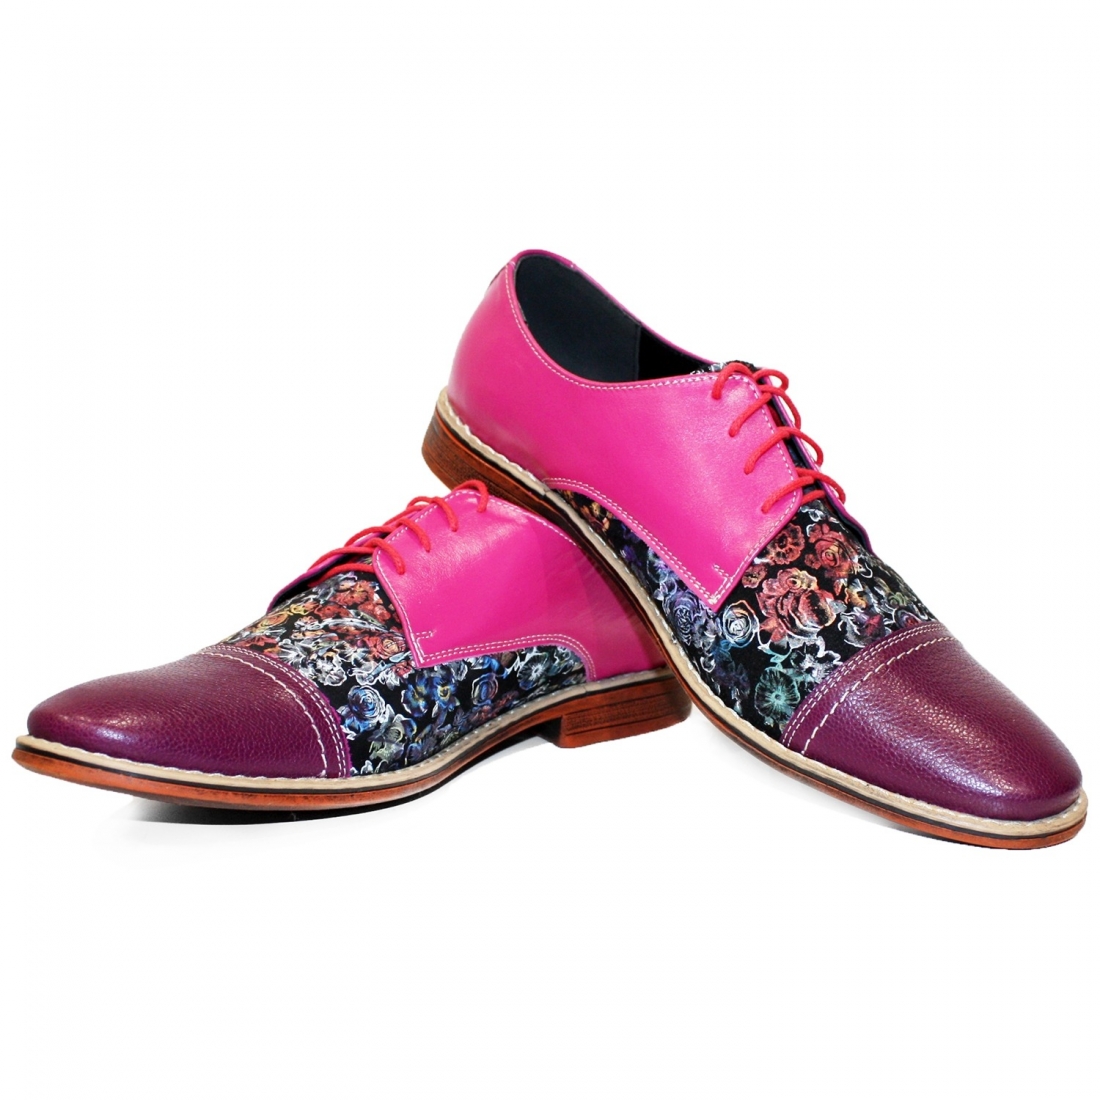 Modello Vollnero - Classic Shoes - Handmade Colorful Italian Leather Shoes